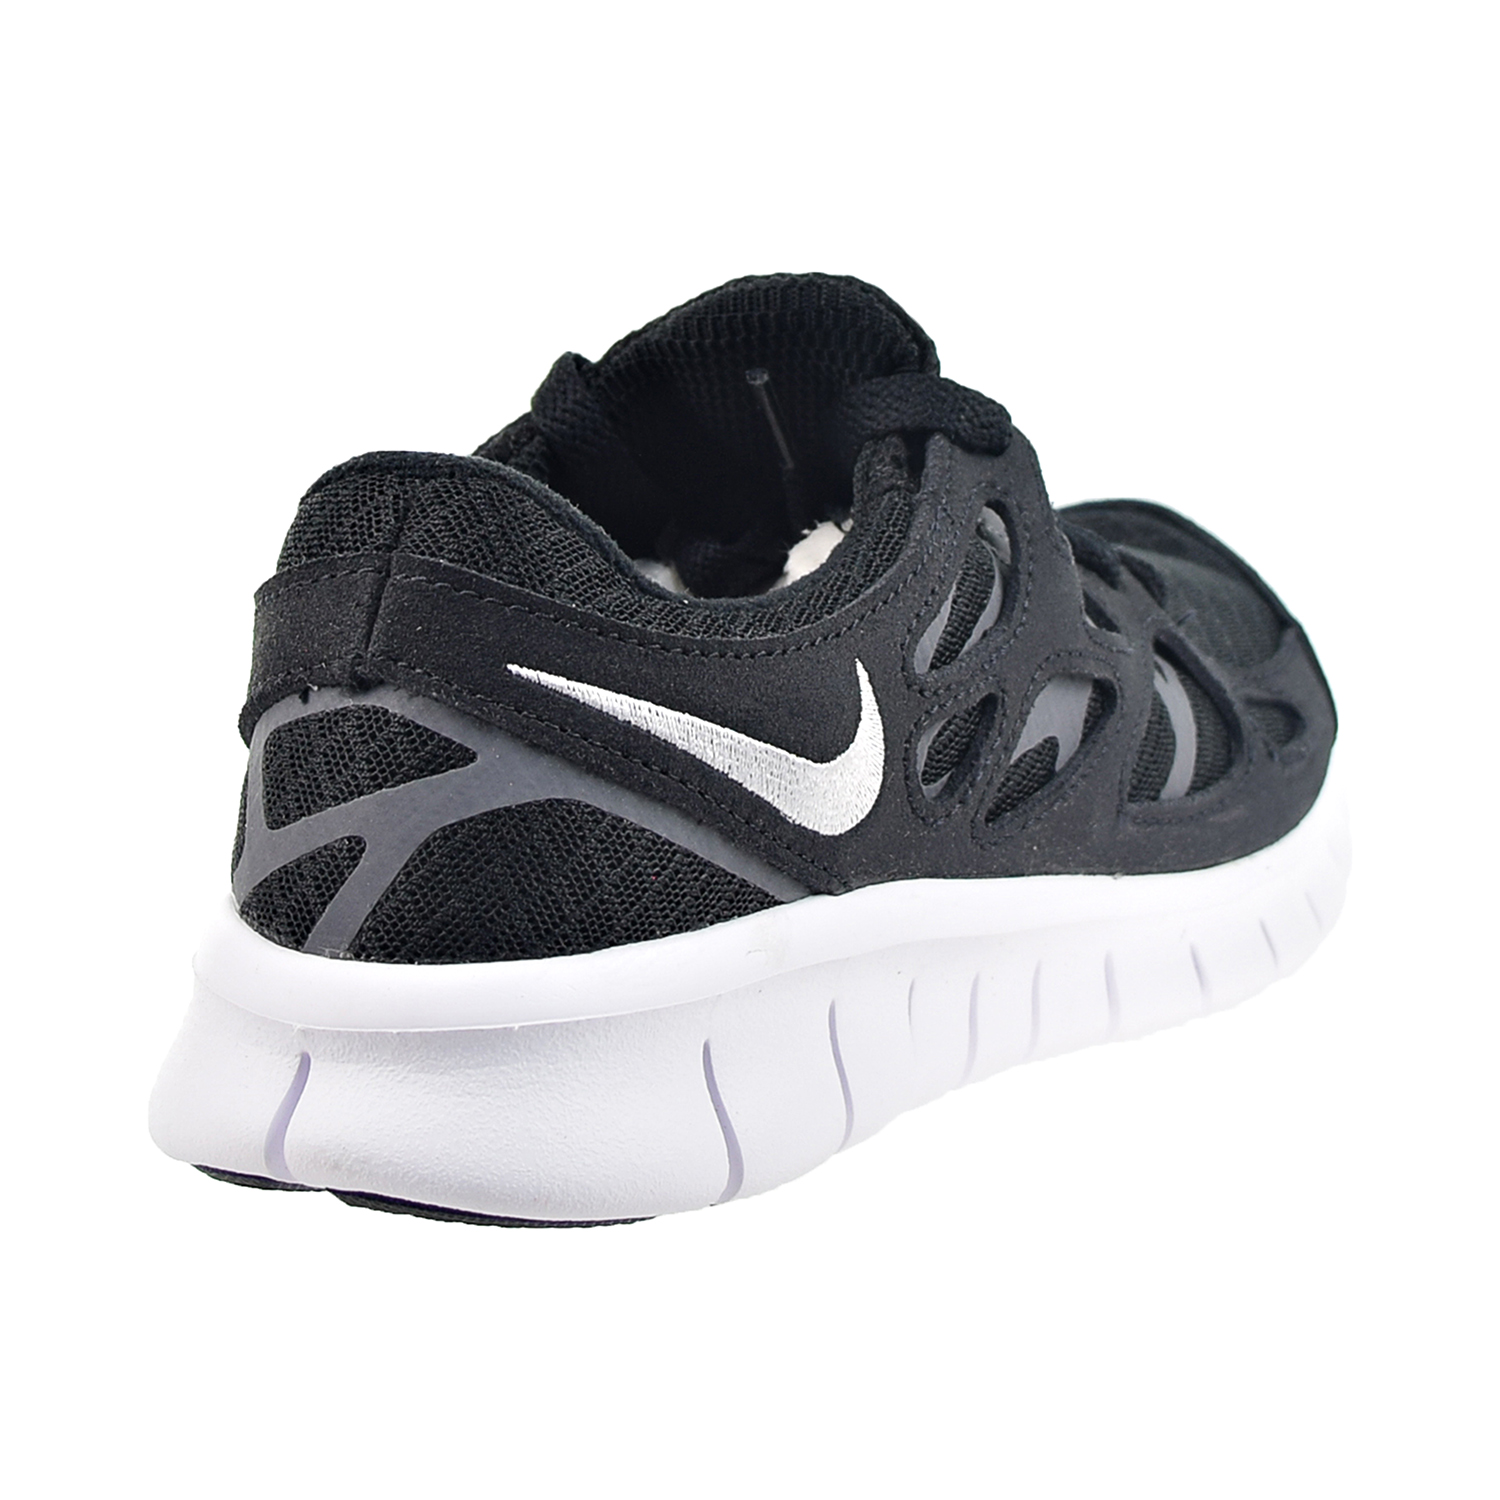 Nike Free Run 2 Women's Shoes Black/White-Dark Grey dm9057-001